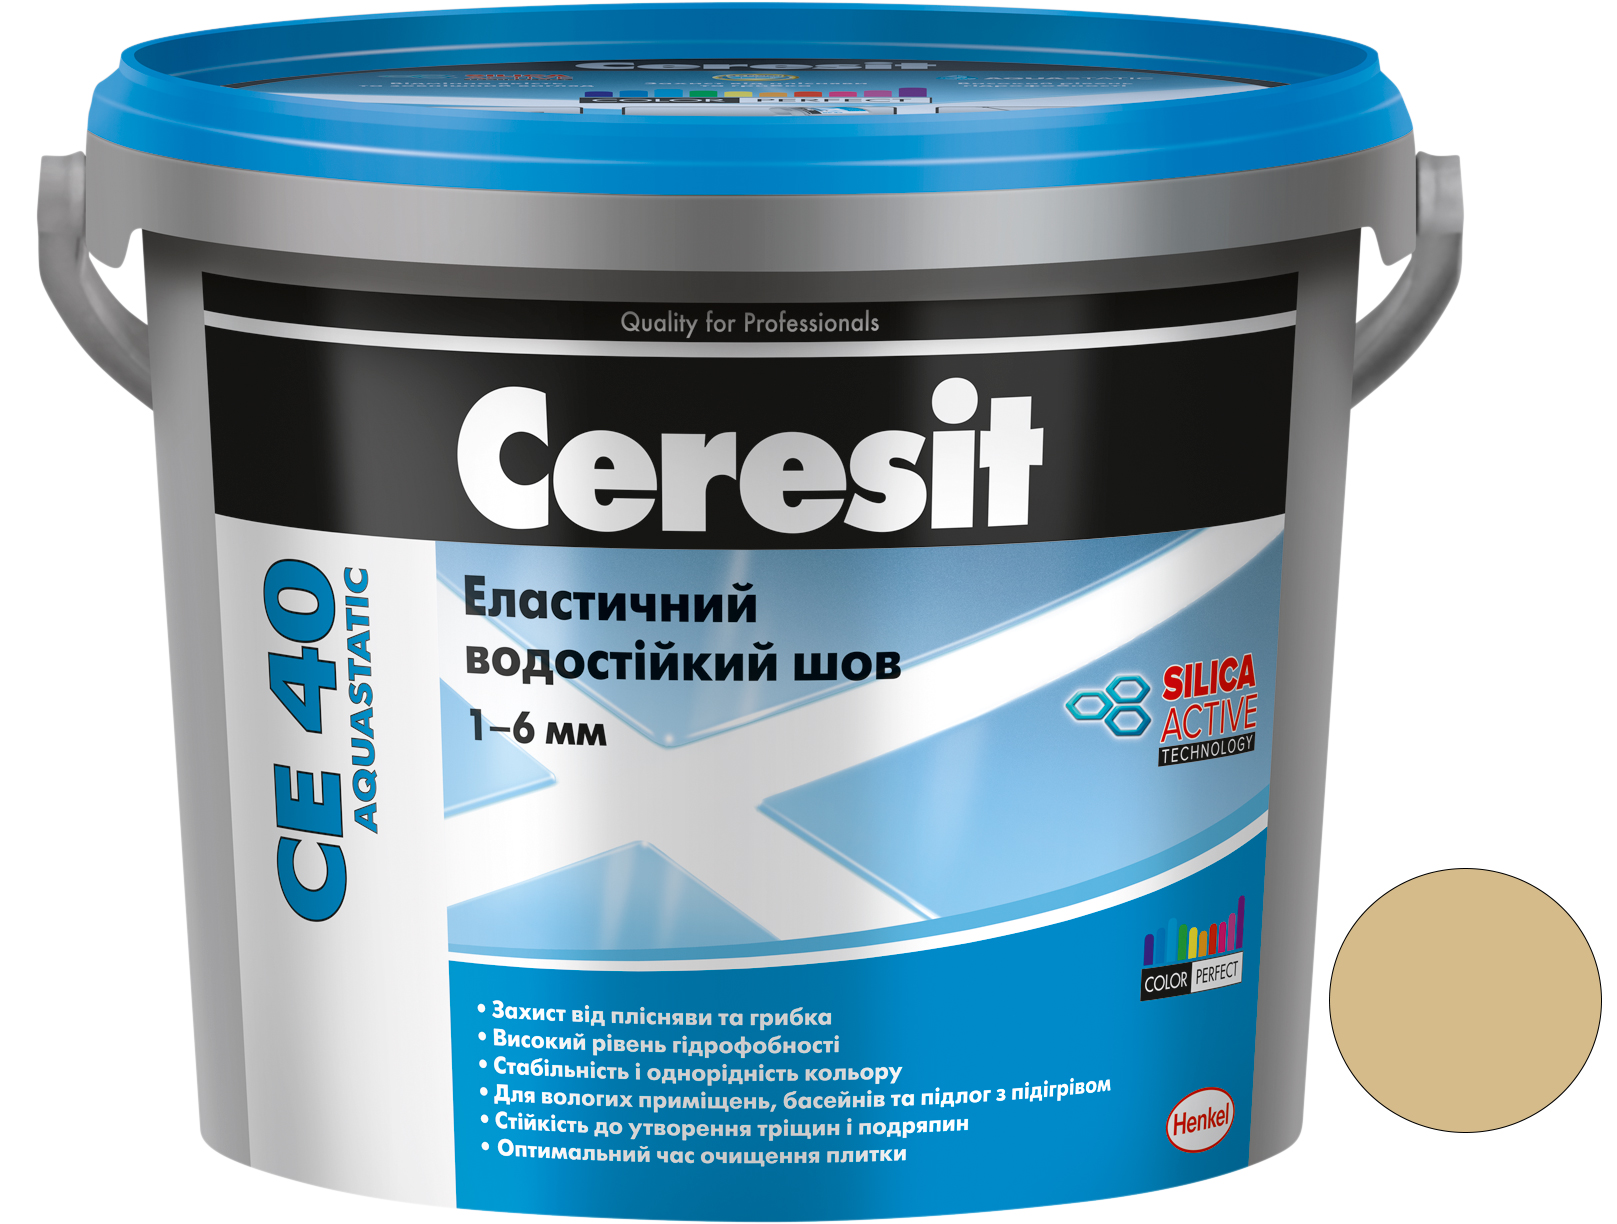  для швов Ceresit CE 40 Aquastatic 25 2 кг (ведро) Сахара .